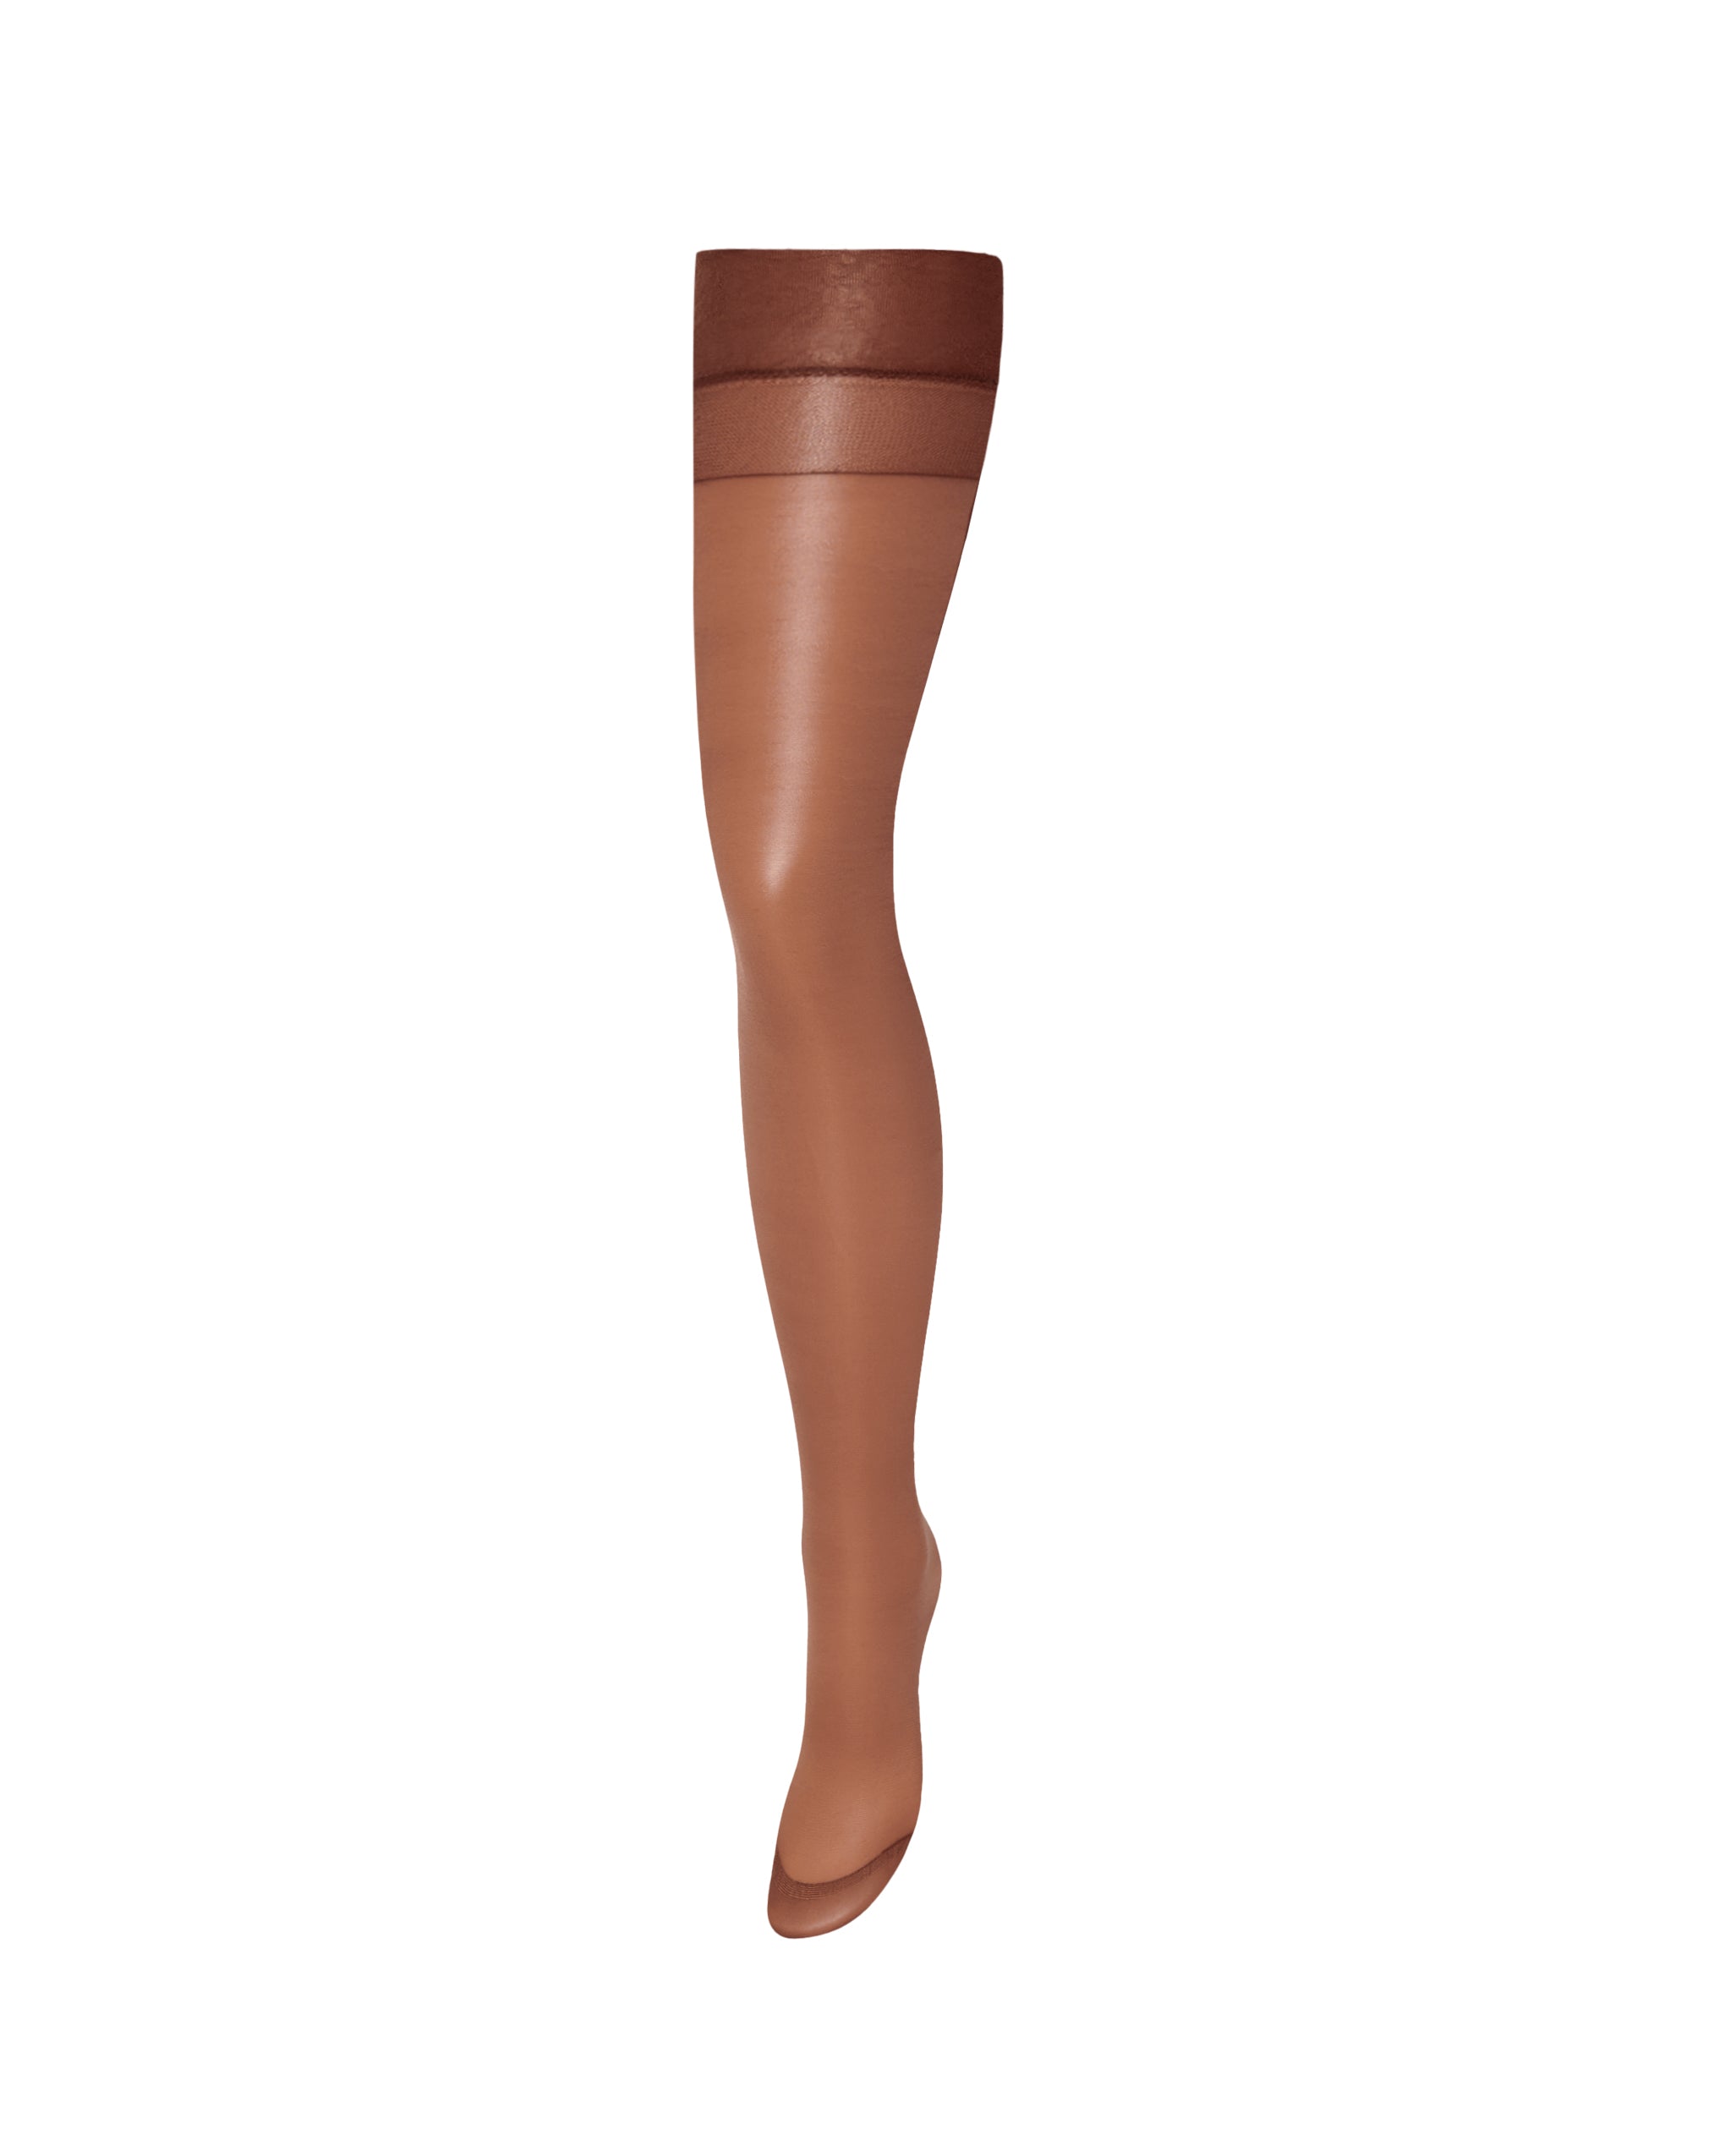 Bluebella Plain Leg/Plain Top Stockings Caramel